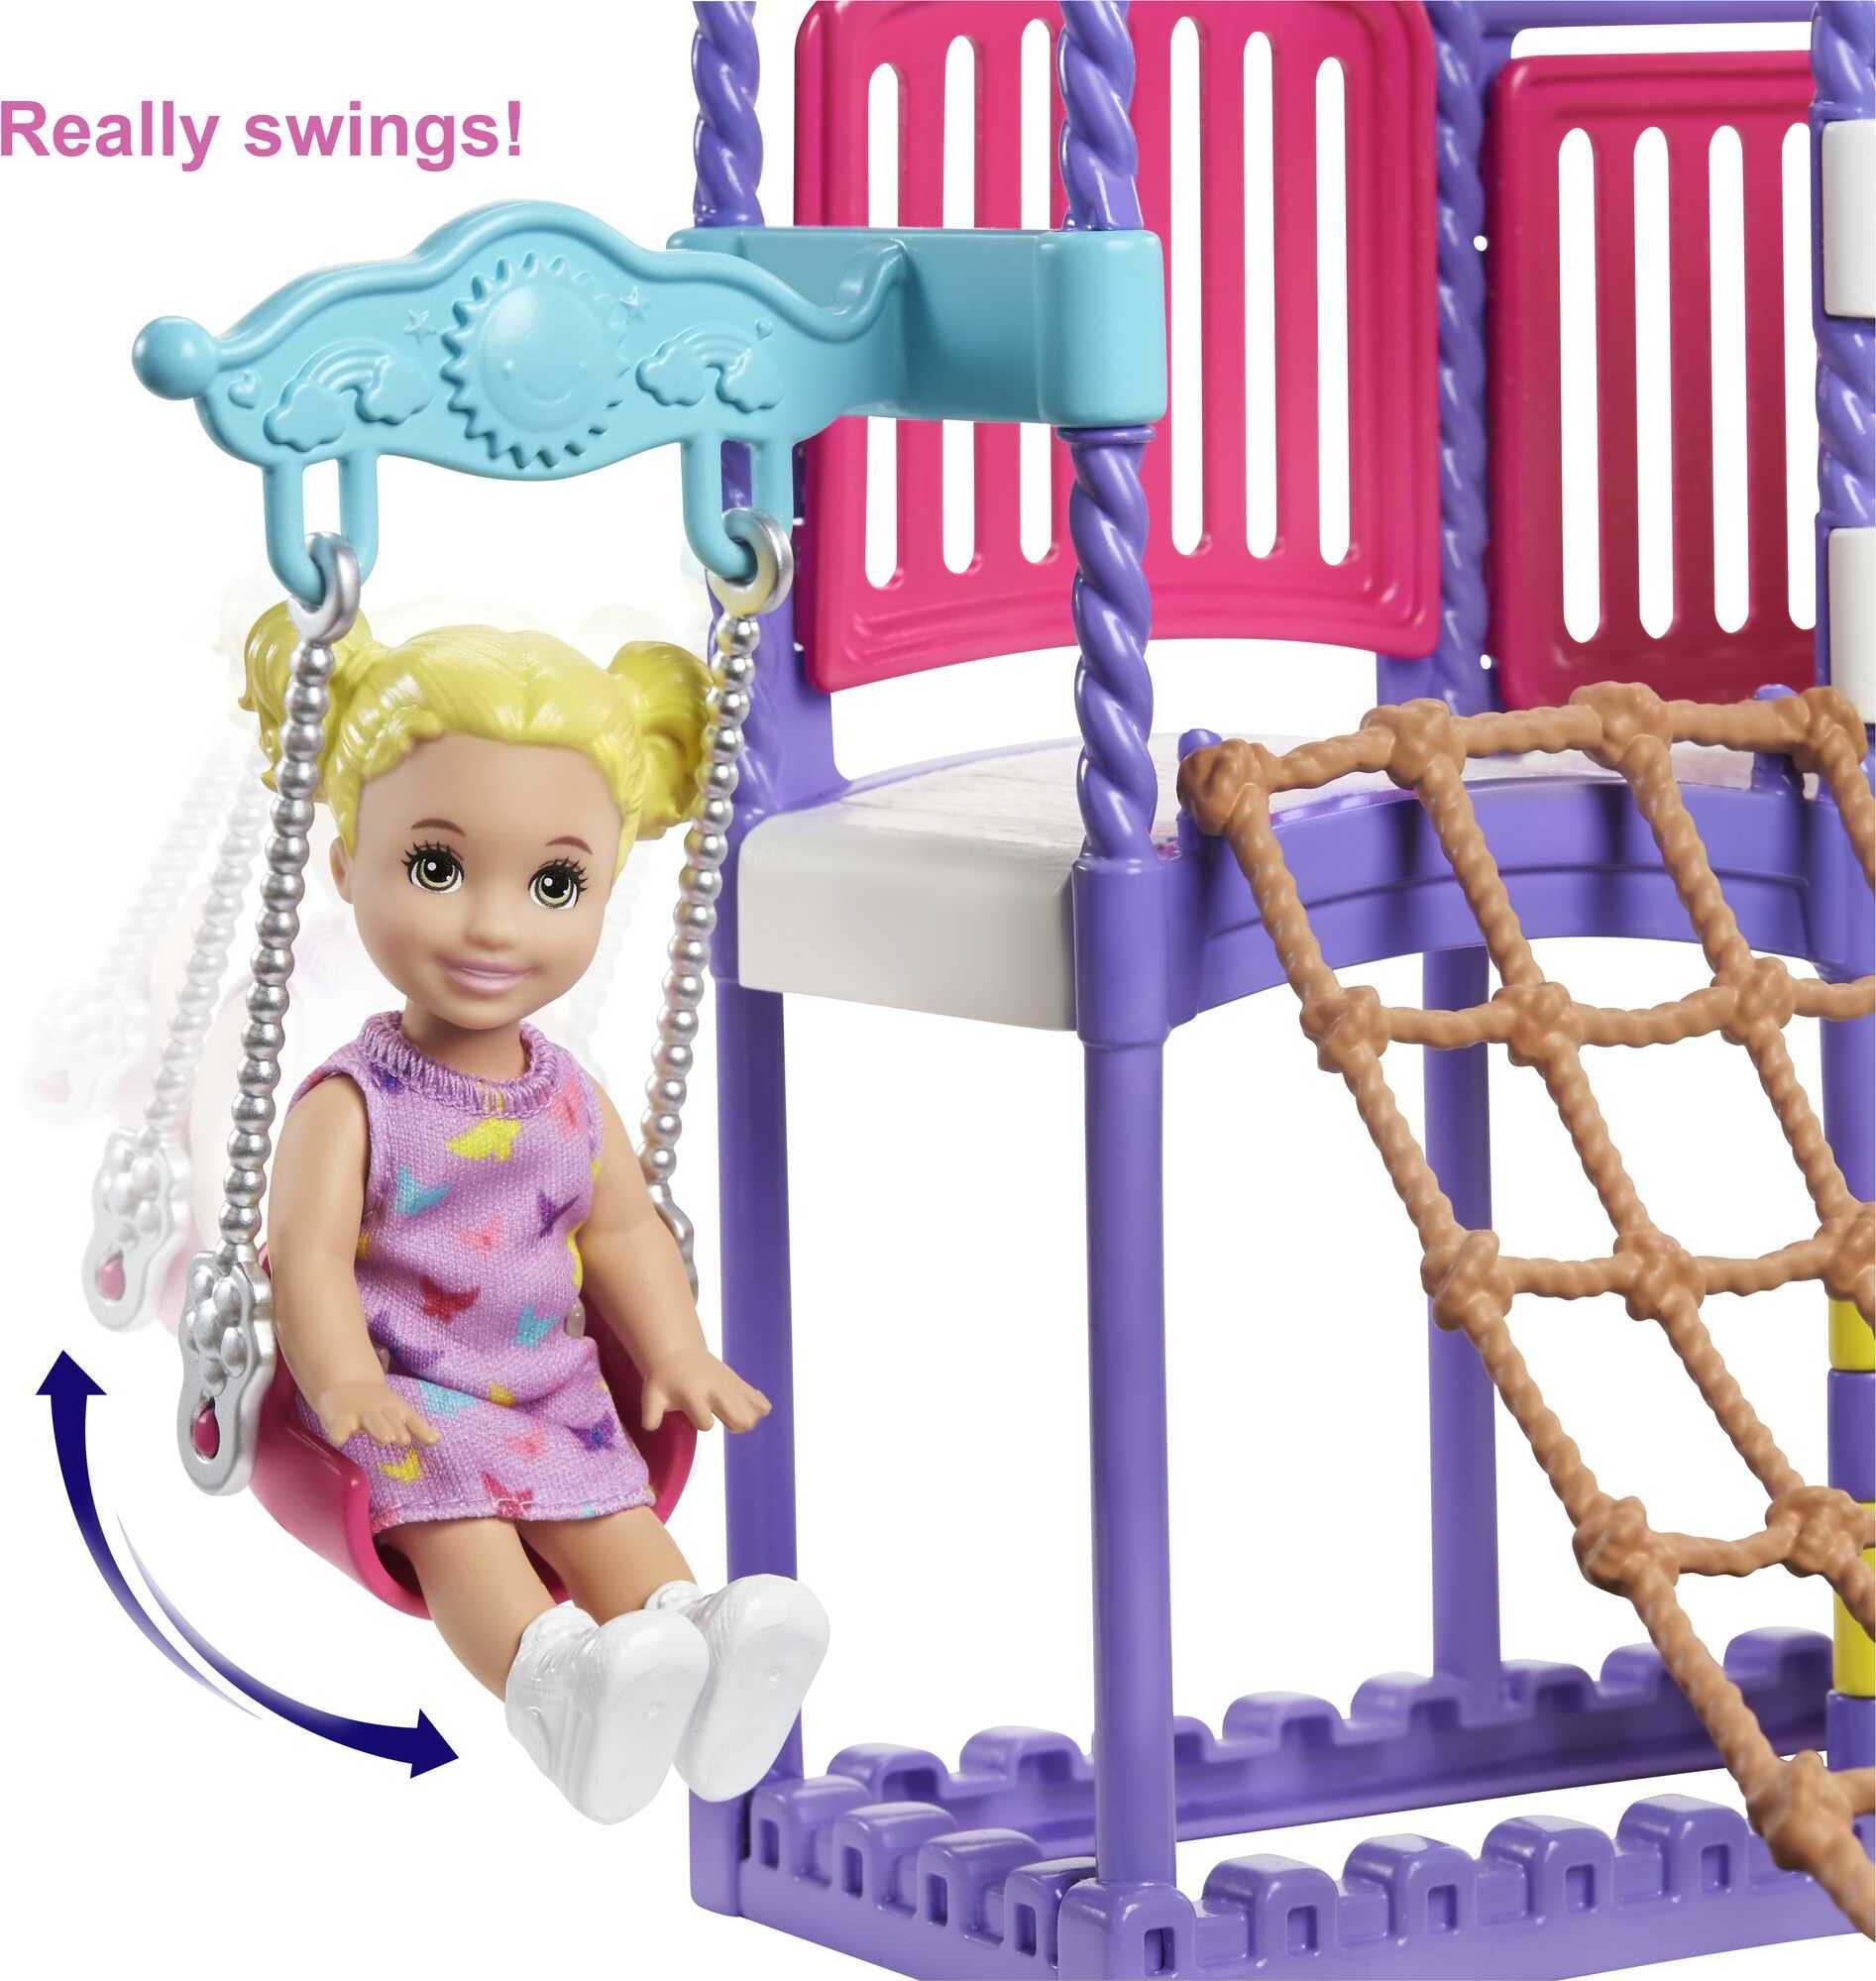 Barbie Skipper Babysitters Inc. Climb ‘n Explore Playground Dolls & Playset - image 5 of 7